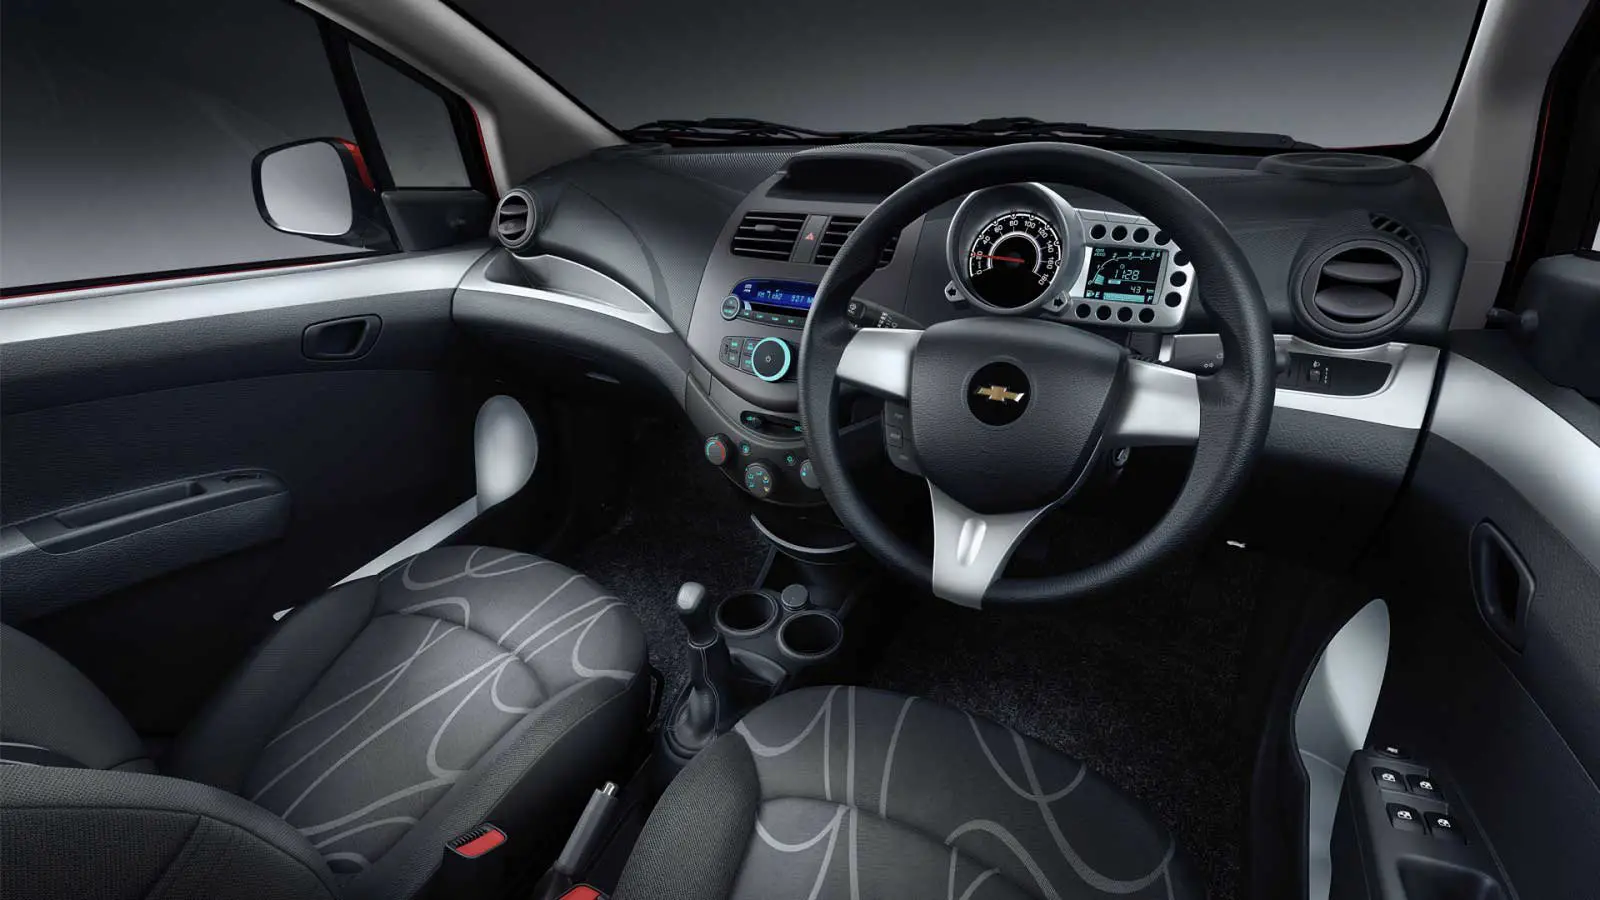 Chevrolet Beat LT Option Diesel Interior front view